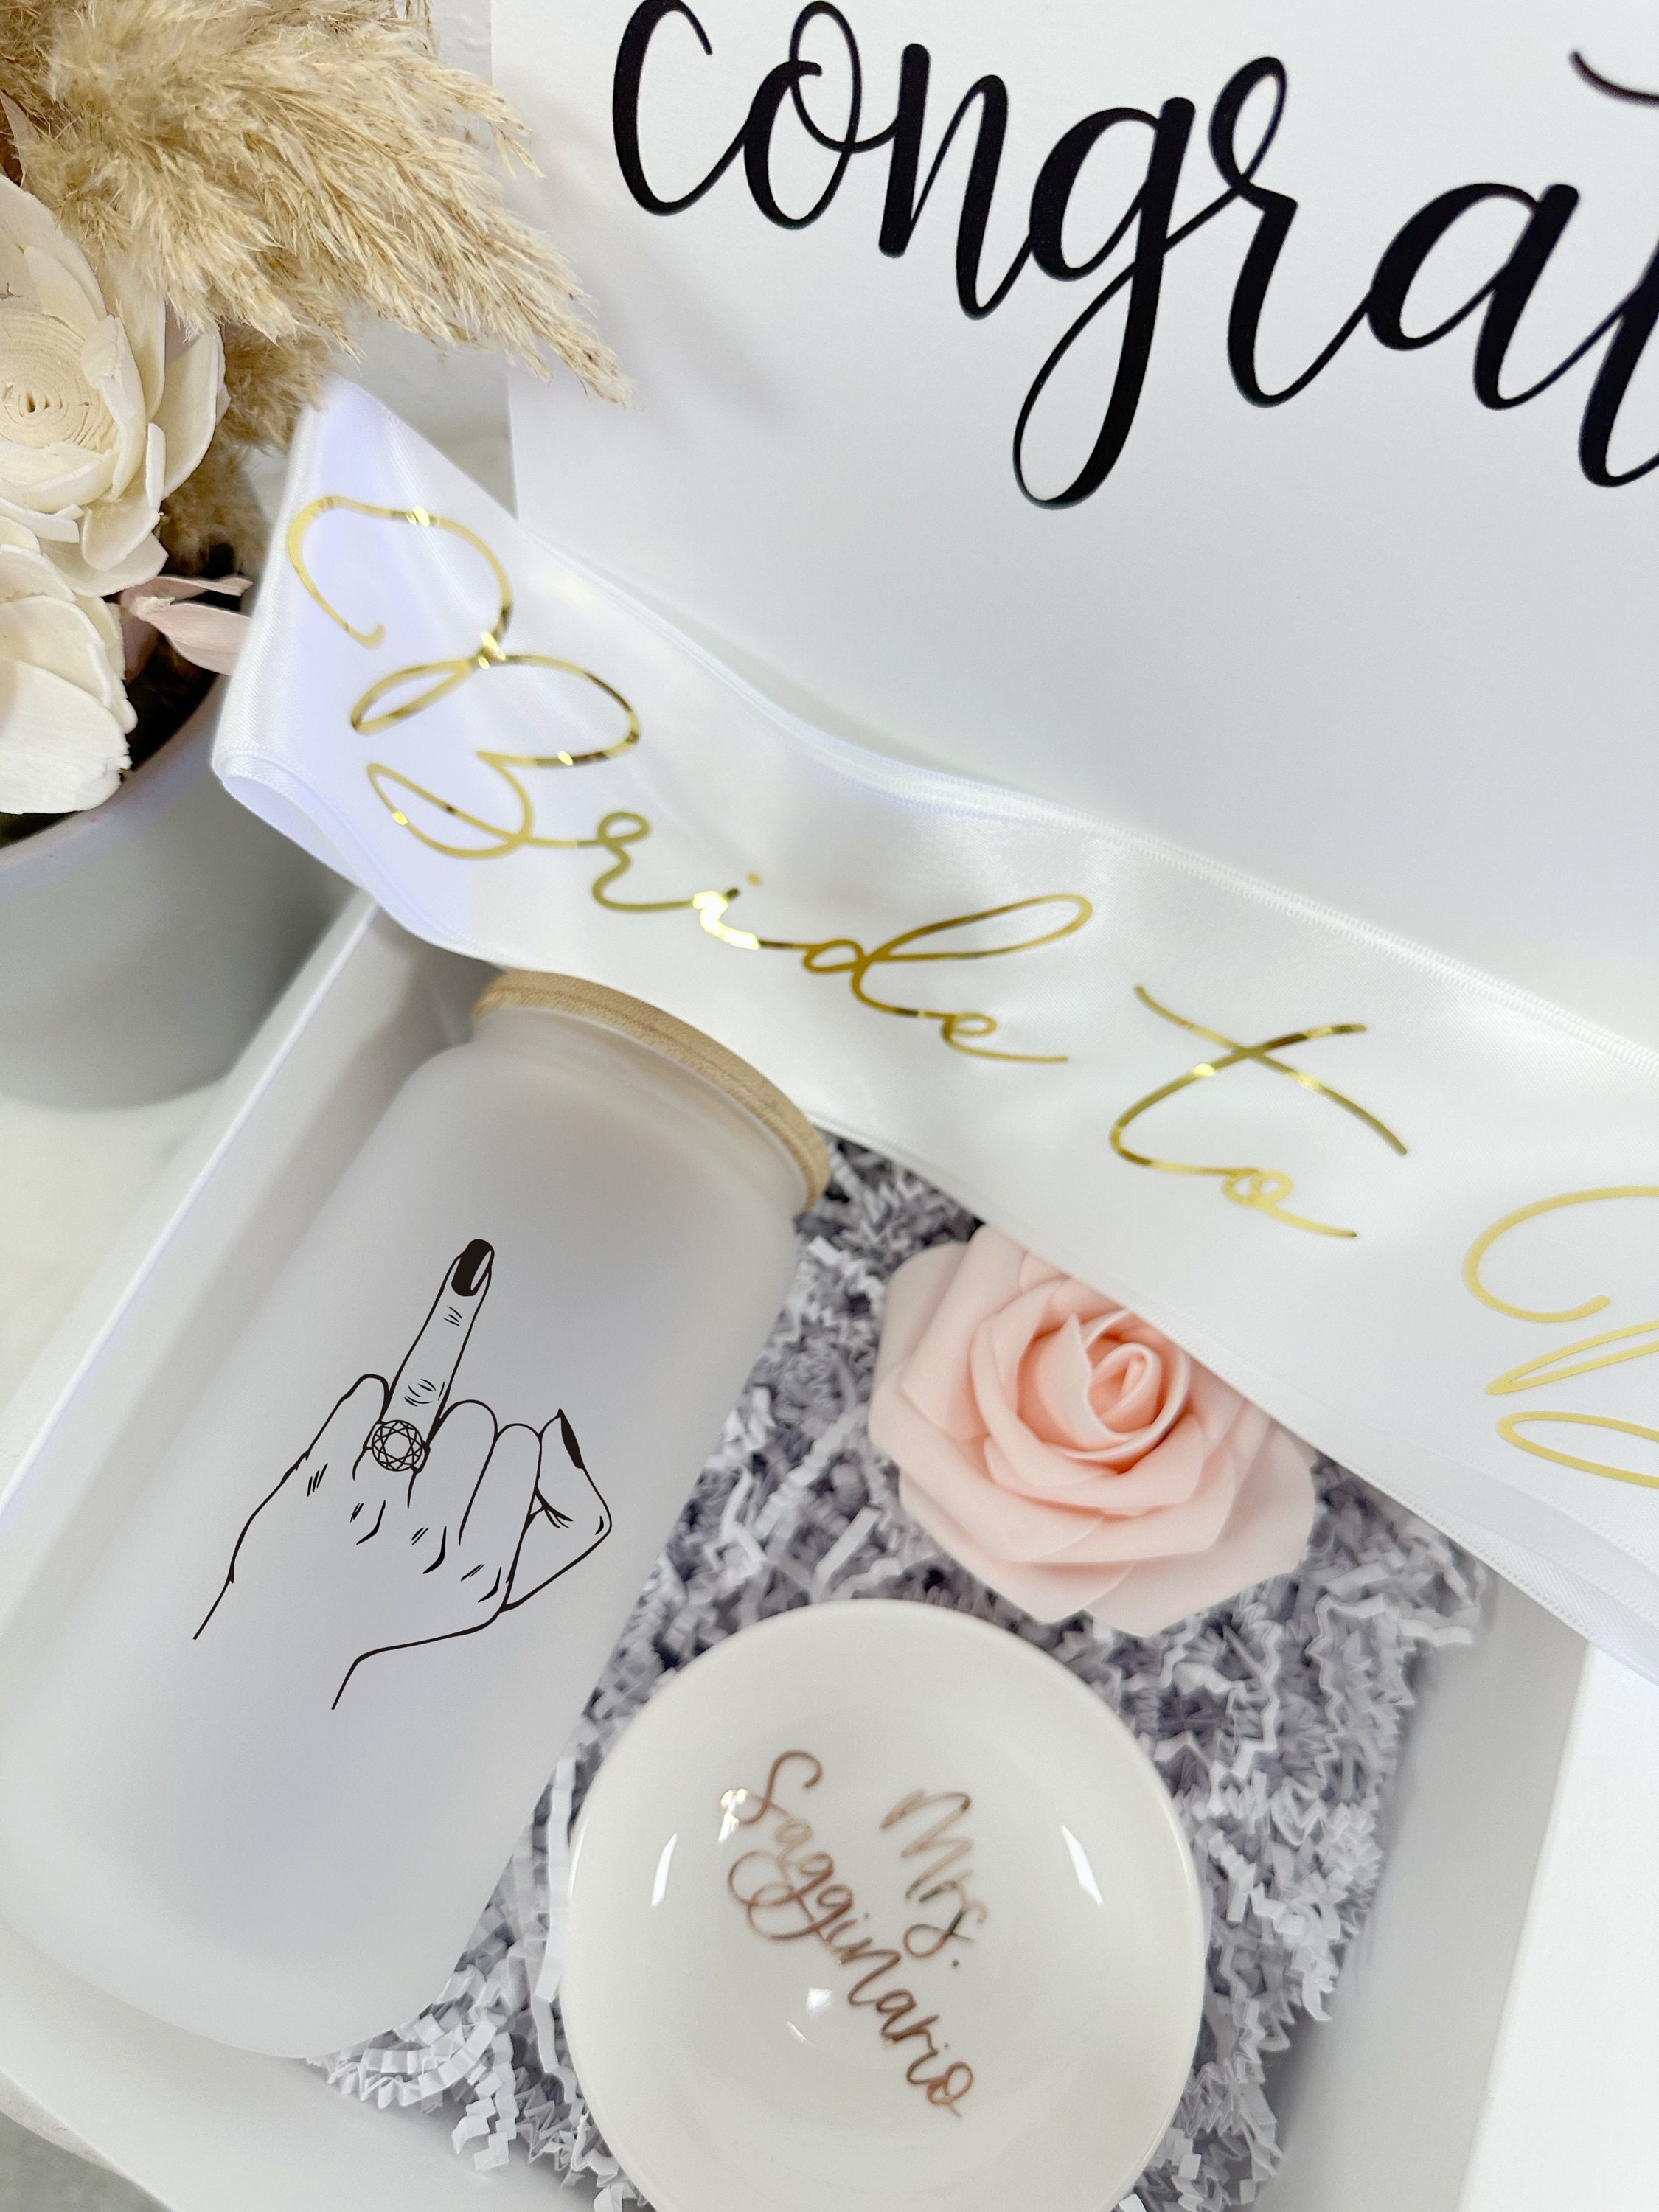 Future Mrs Gift Box Bride Gifts Bridal Shower Gifts Personalized Wifey Gift  Wedding Ring Finger Mug Bride Gift Box Engagement Box Idea 